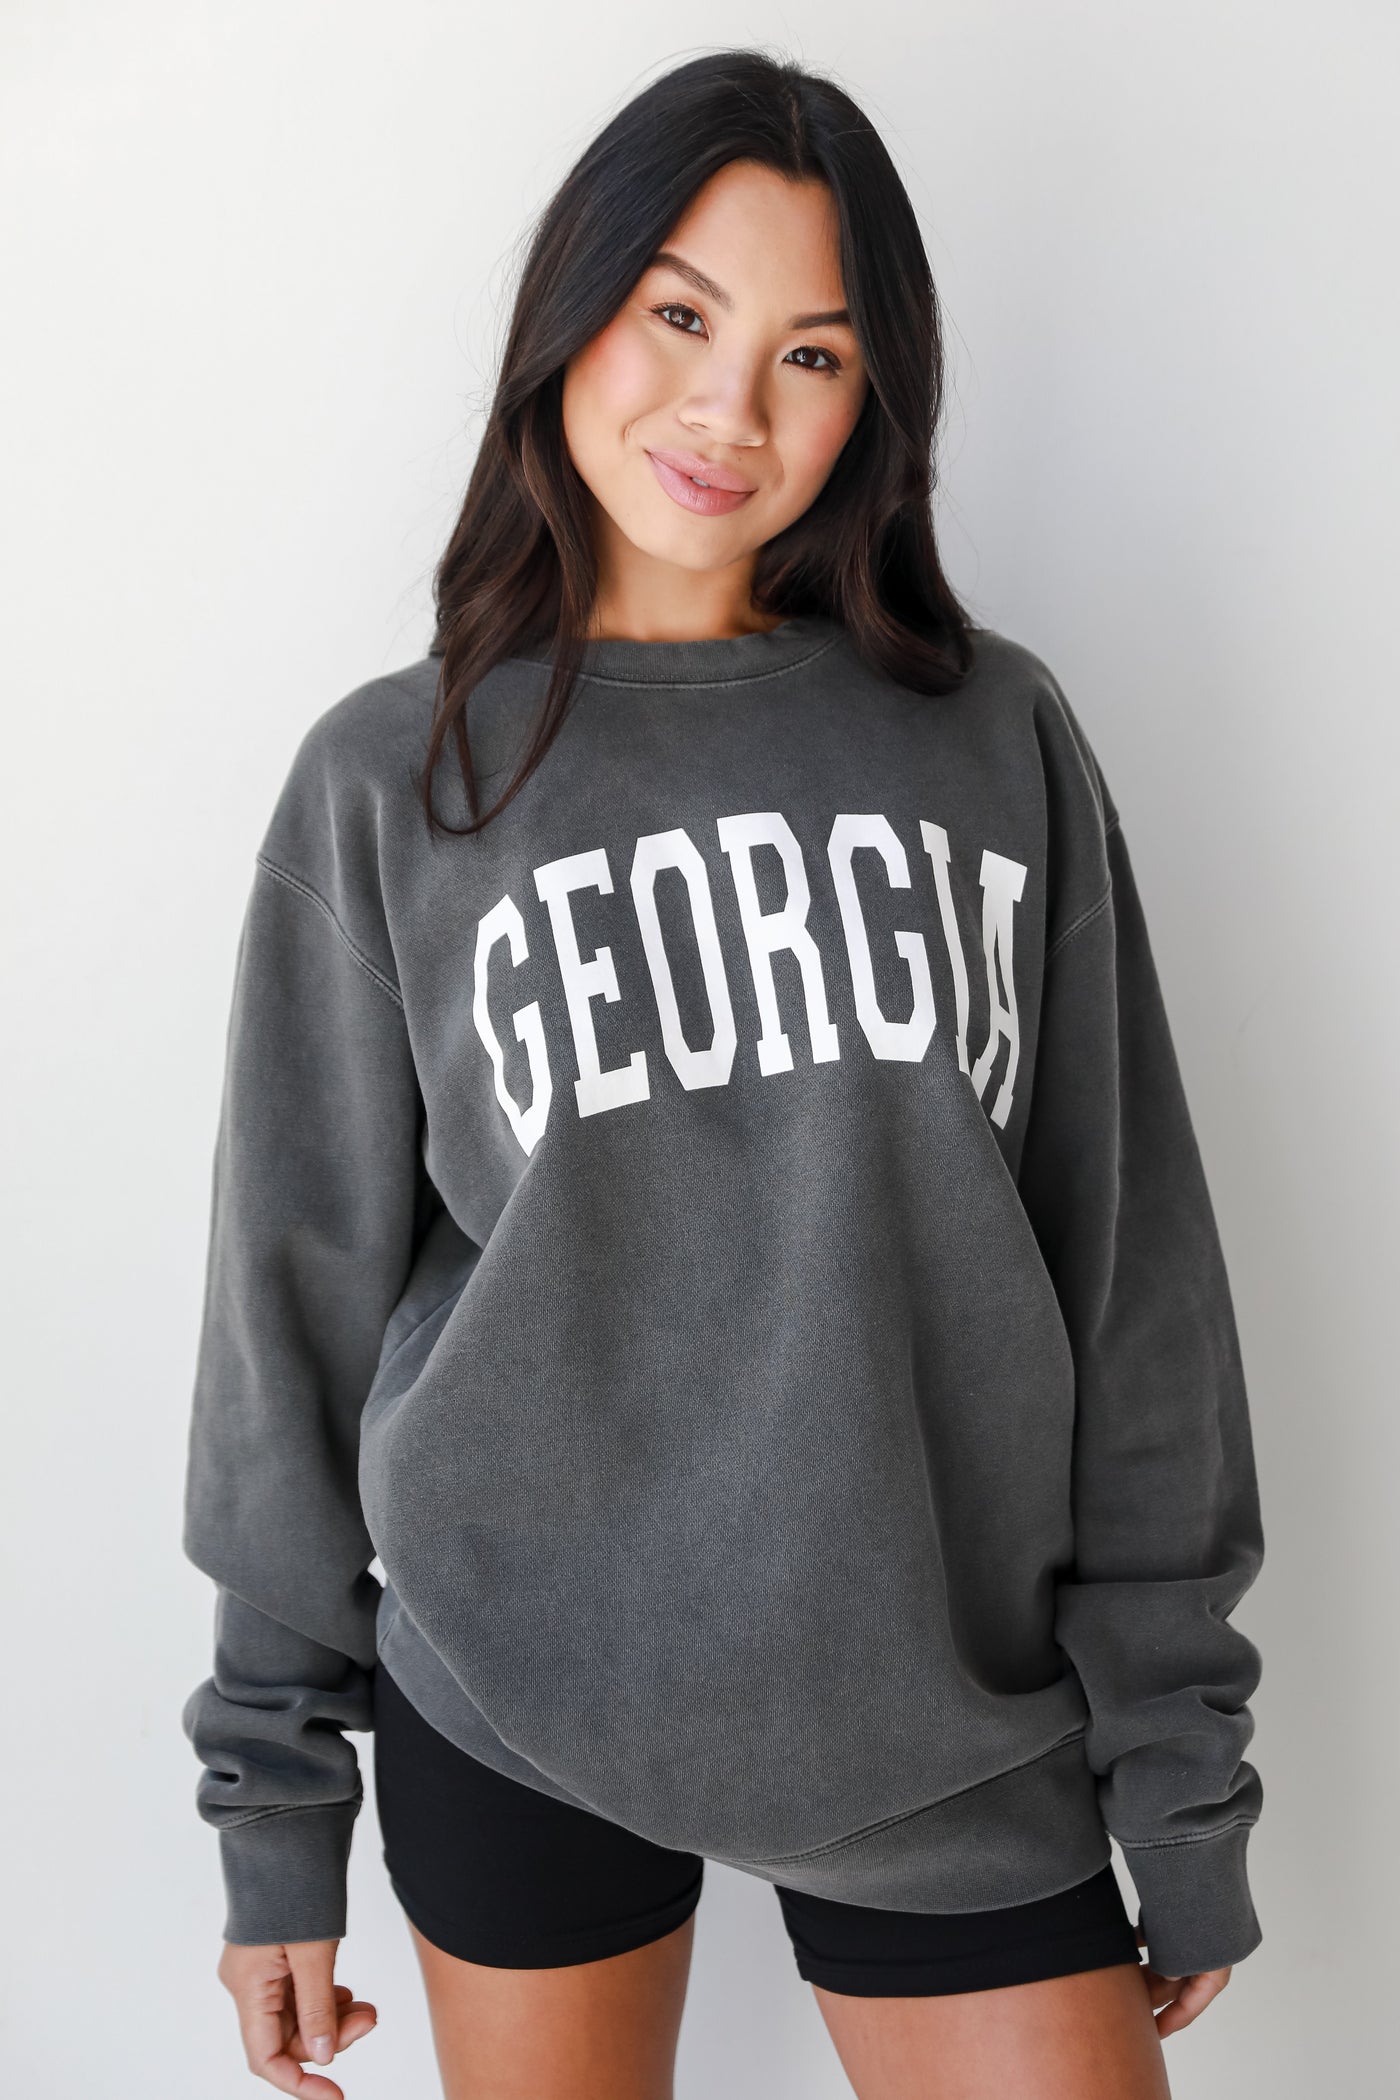 Charcoal Georgia Pullover. UGA Gameday Shirt. Oversized Sweatshirt. Cute Gameday Outfits